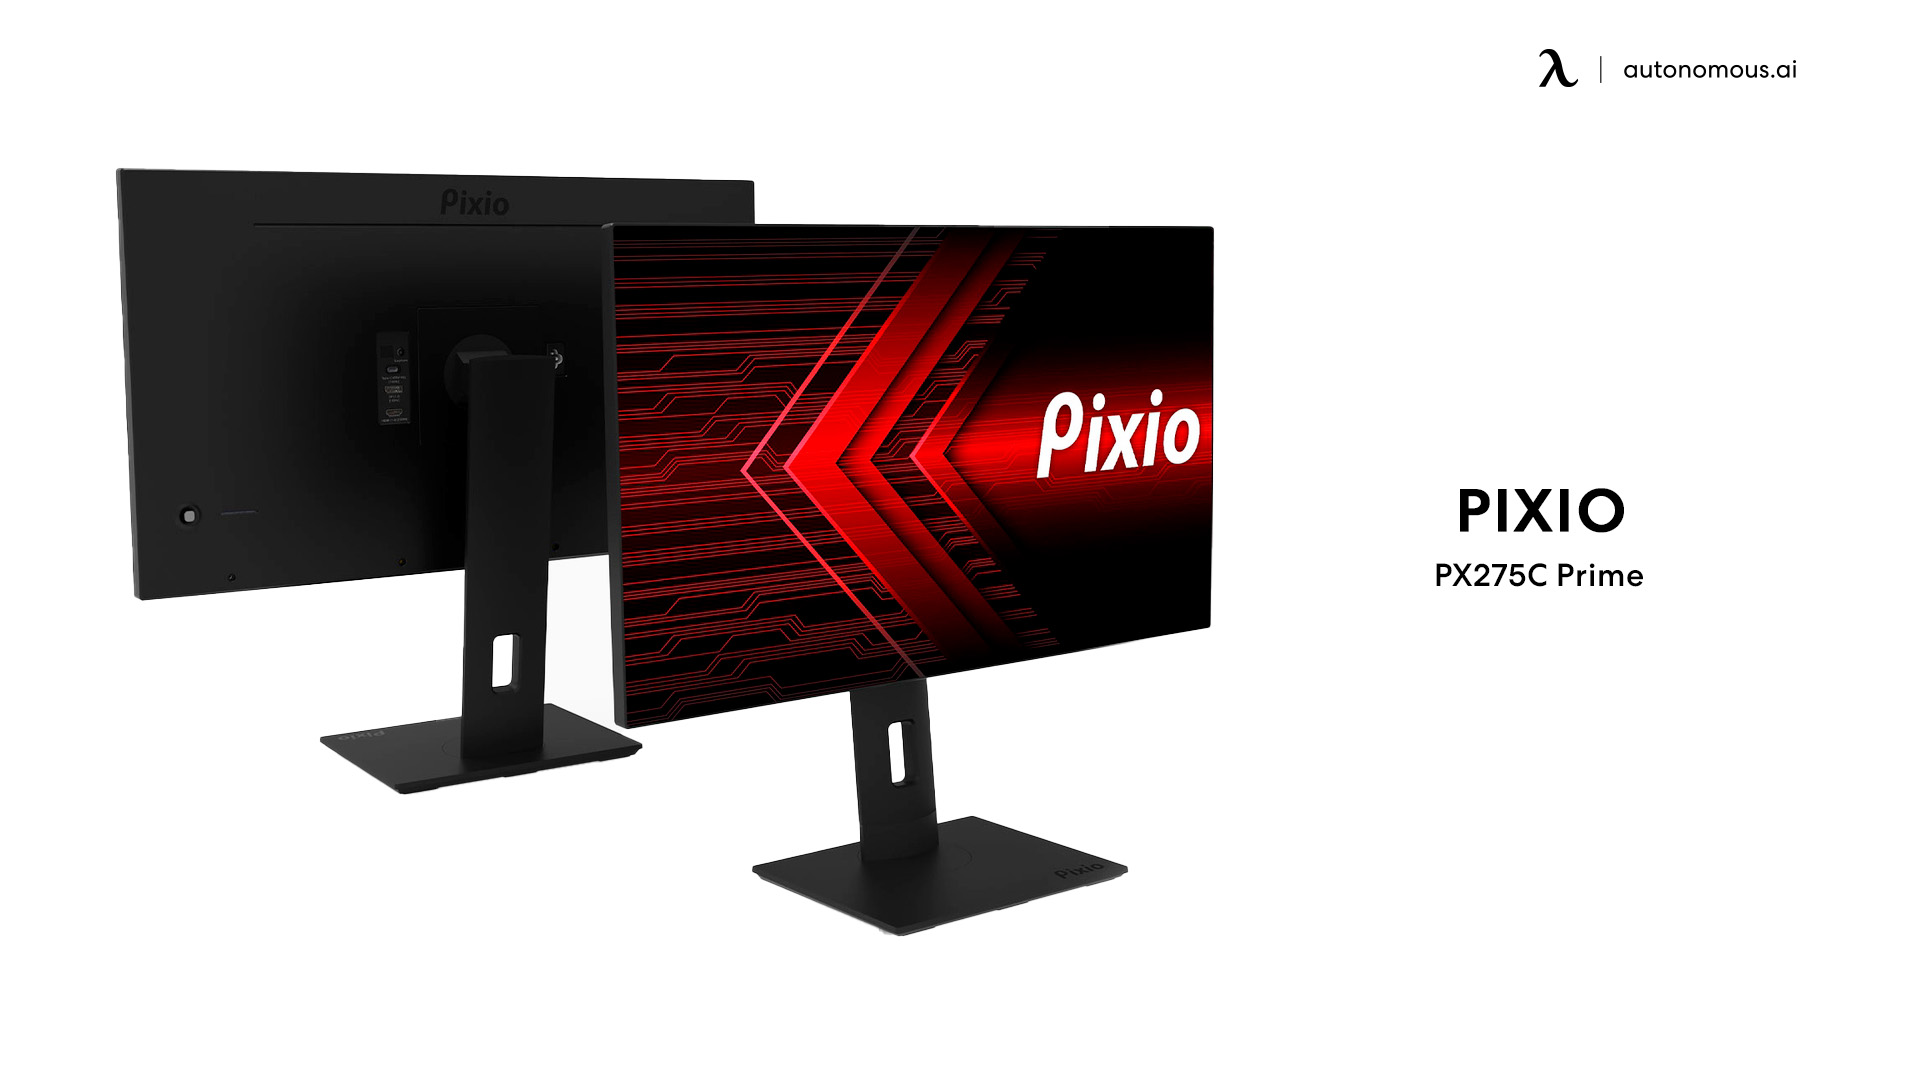 PX275C Prime by Pixio